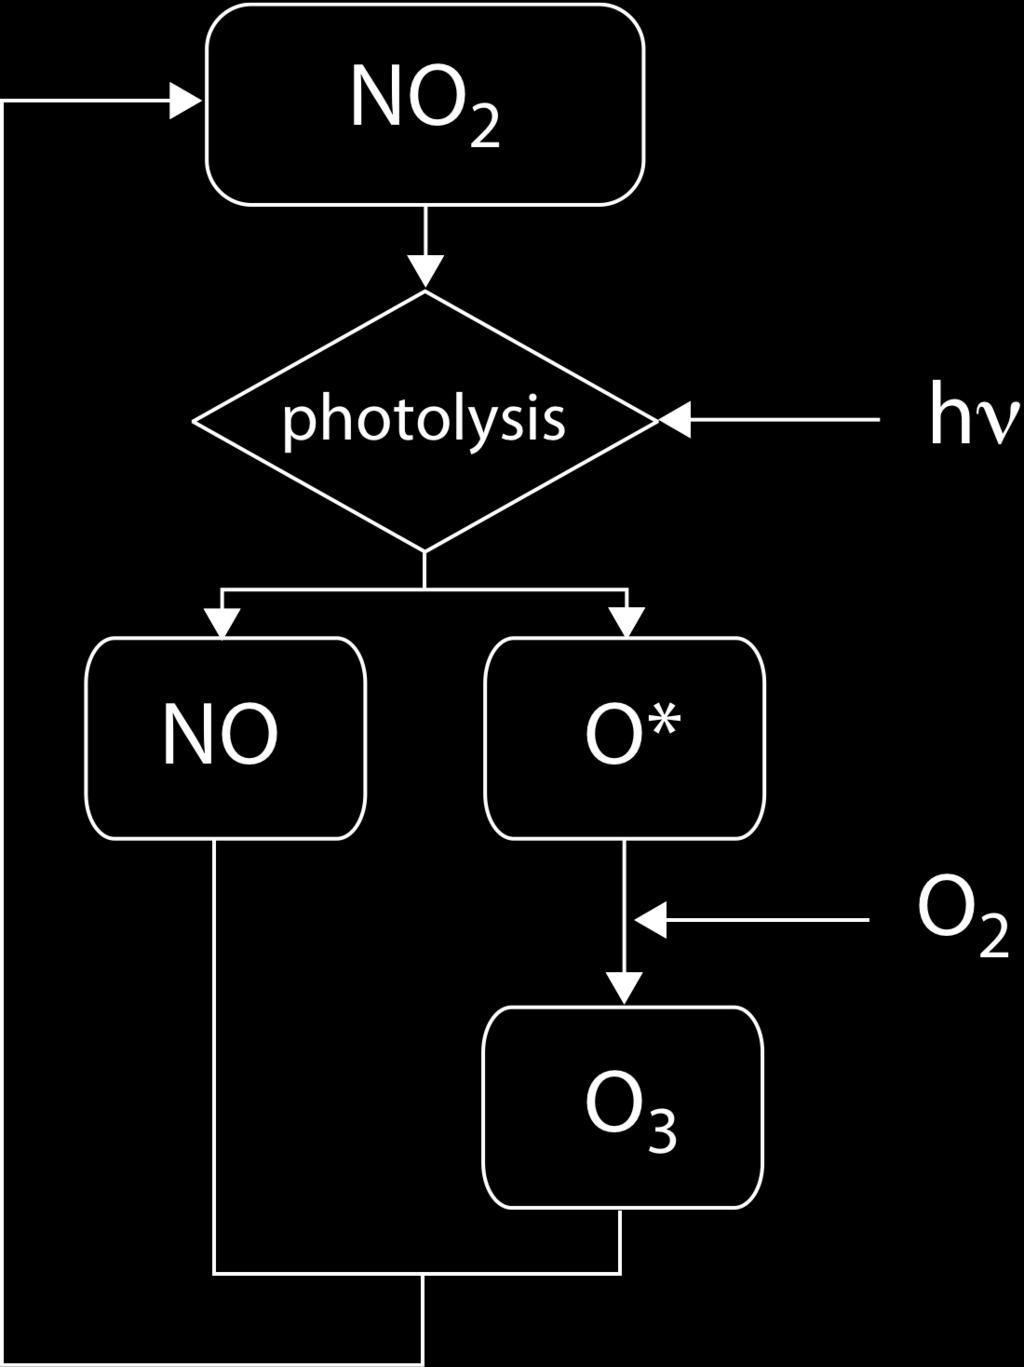 tropospheric chemistry Photochemical reactions involving unburned fuel